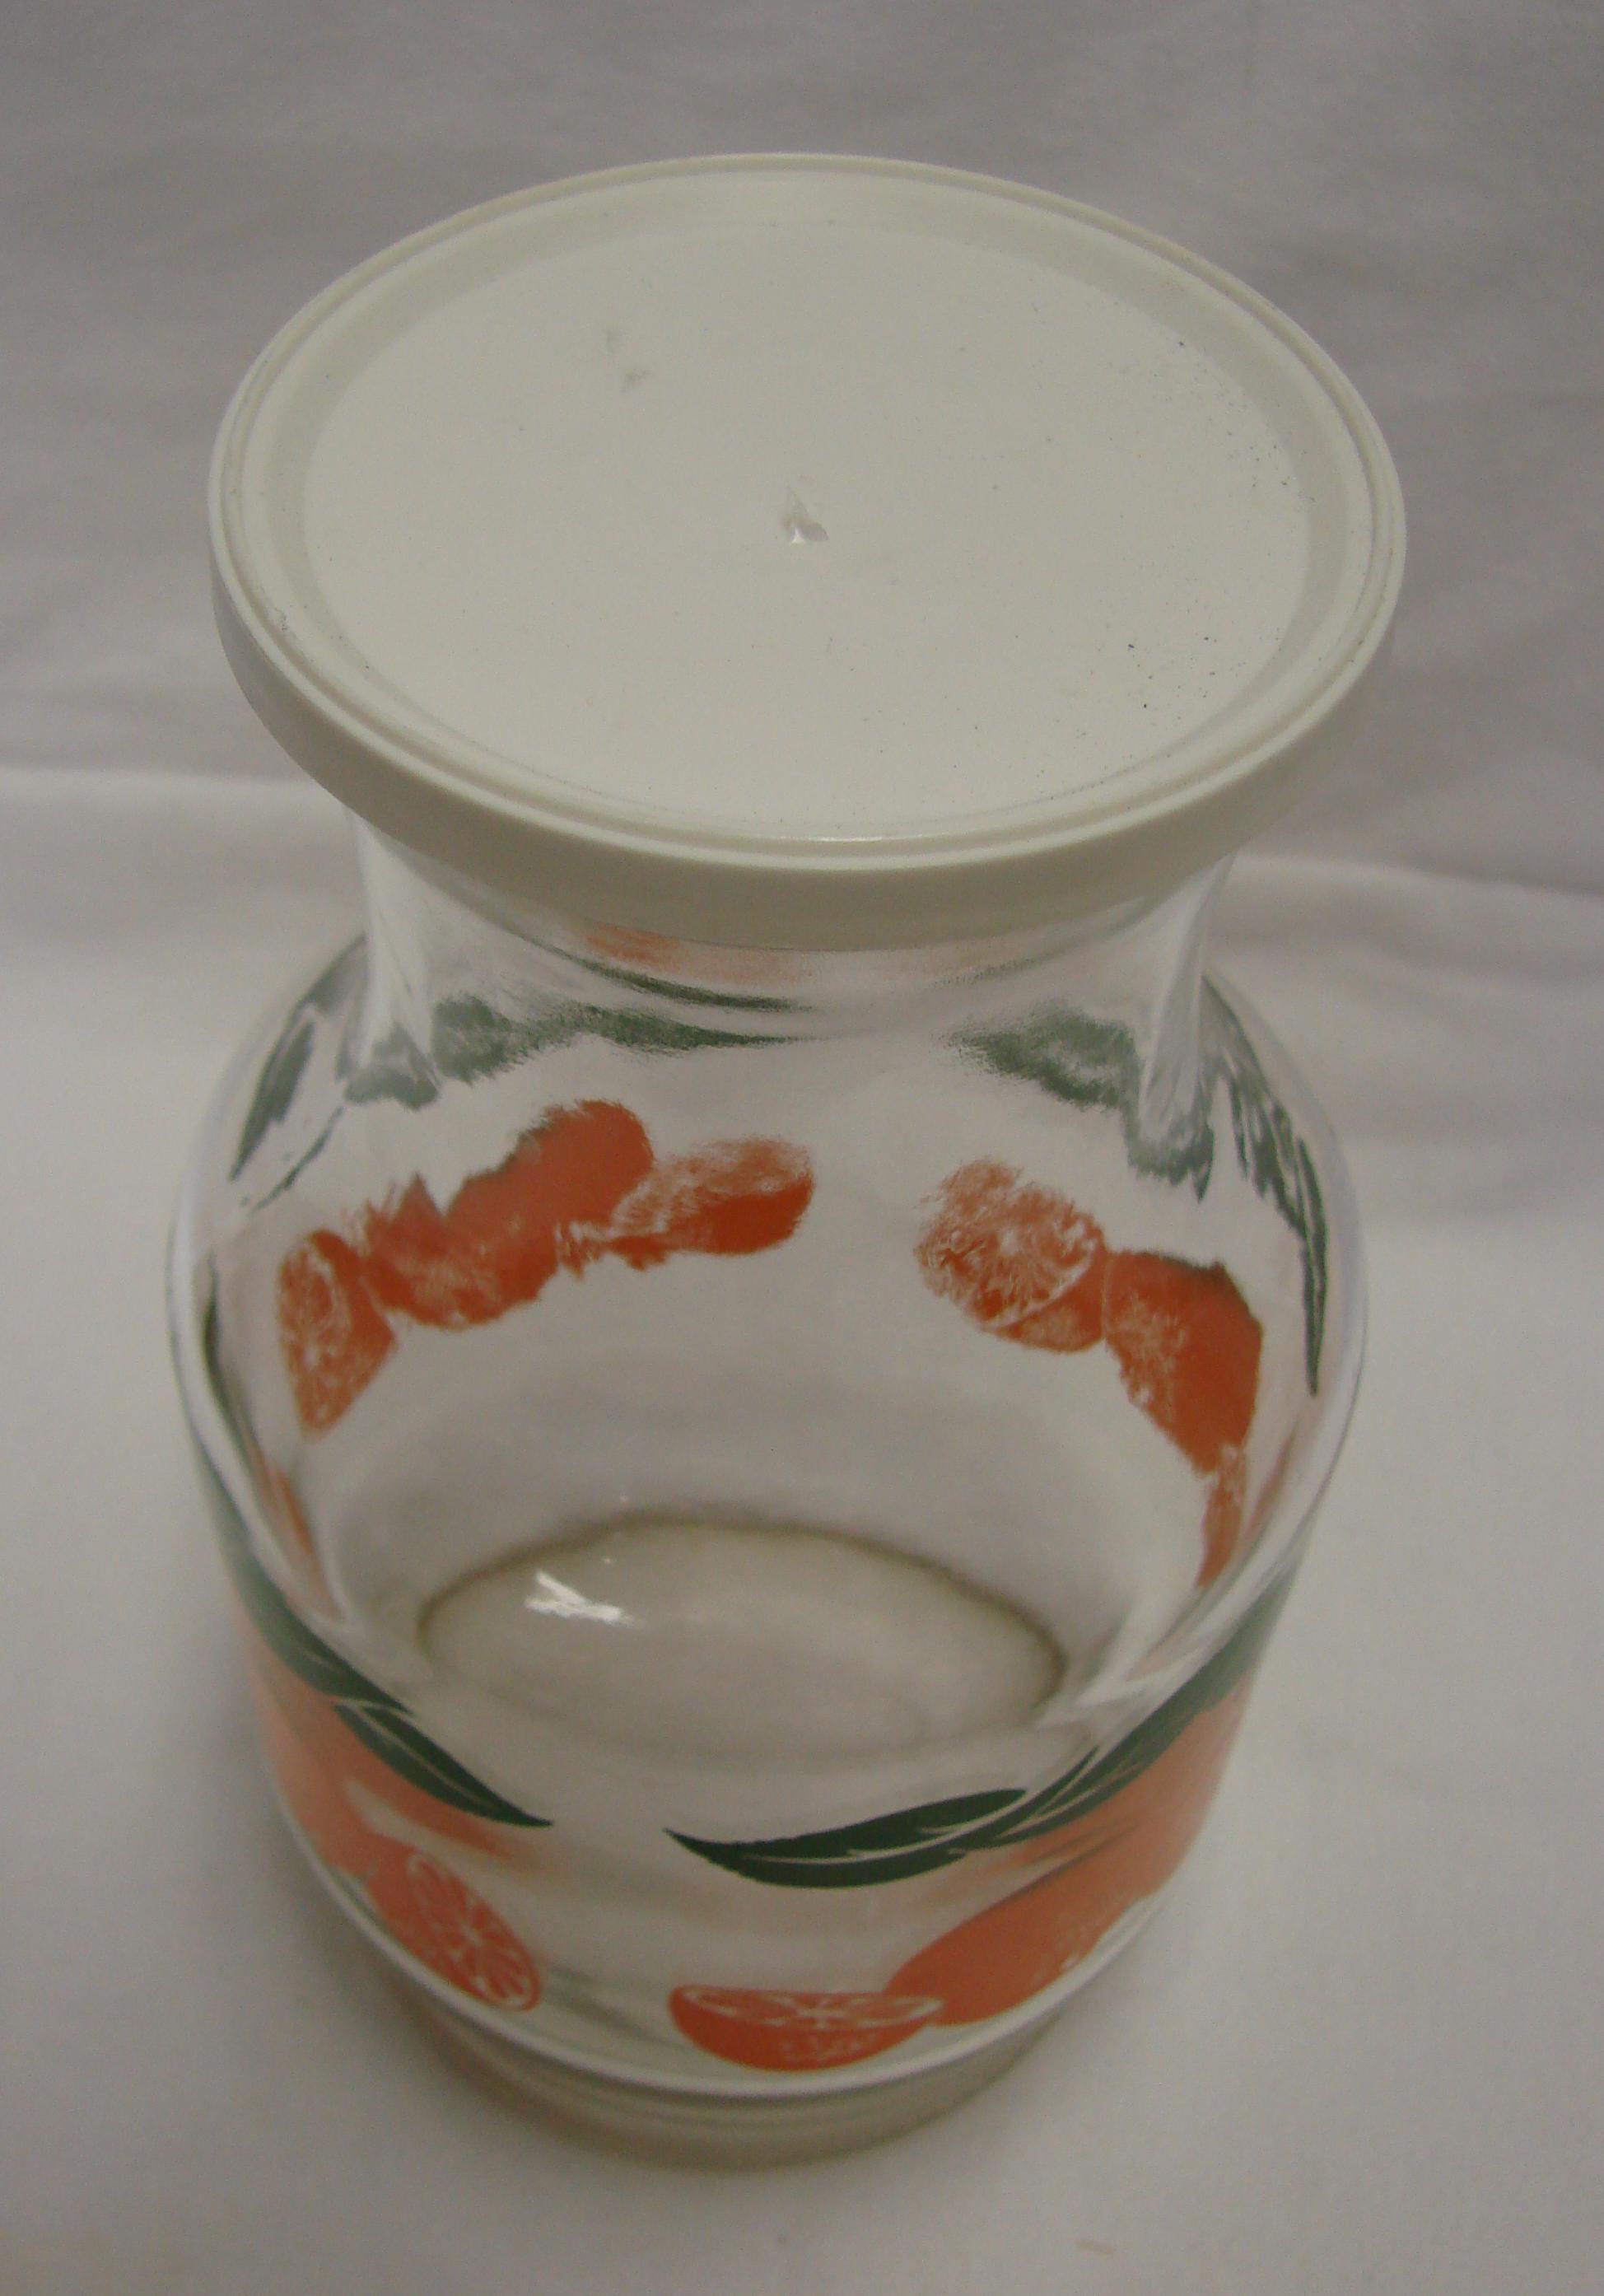 Vintage Anchor Hocking Orange Juice Clear Glass Pitcher Decanter Carafe with Lid